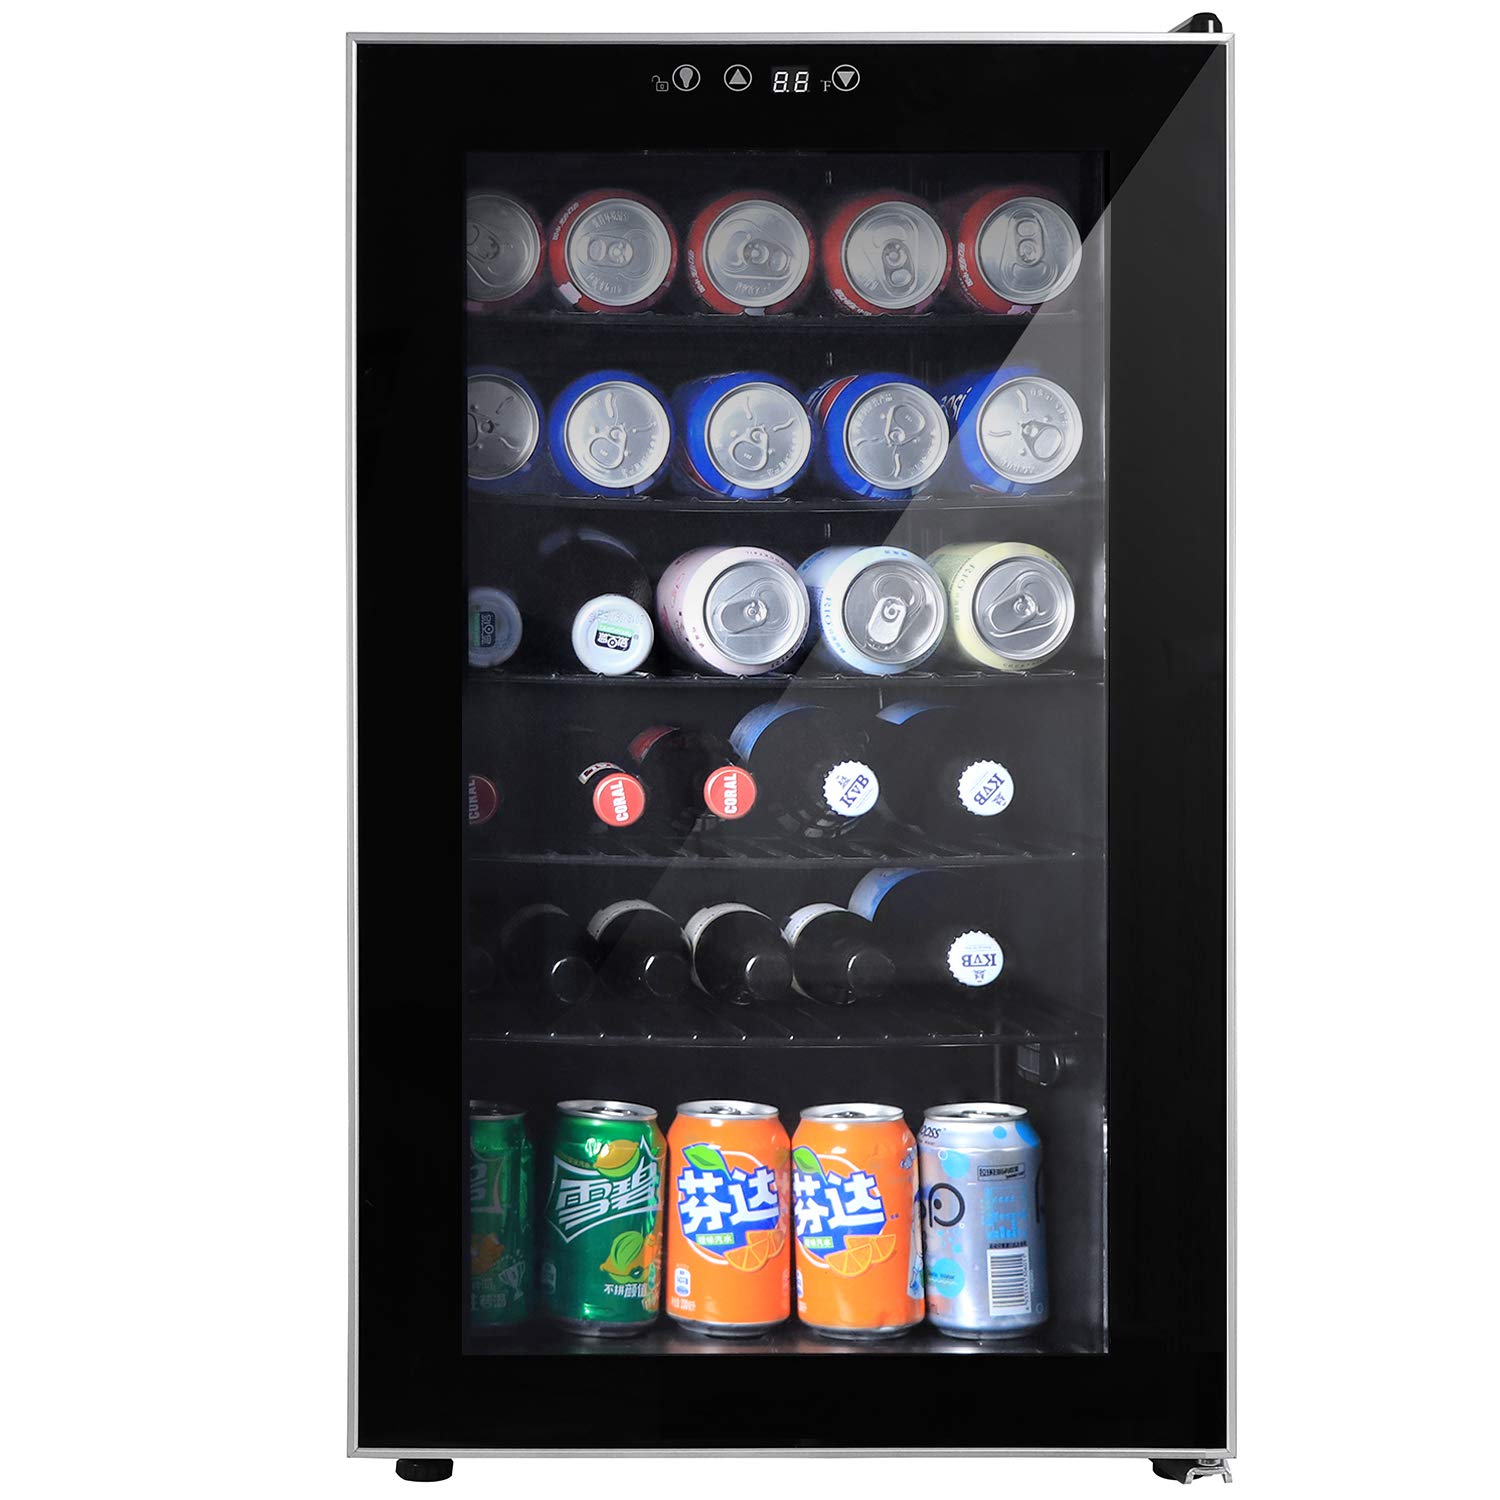 Northair Beverage Cooler and Fridge With Glass Door, 60 Can Beverage Mini Fridge, Adjustable Shelves Dispenser Countertop Refrigerator Cellars, Perfect for Soda Beer or Small Drink